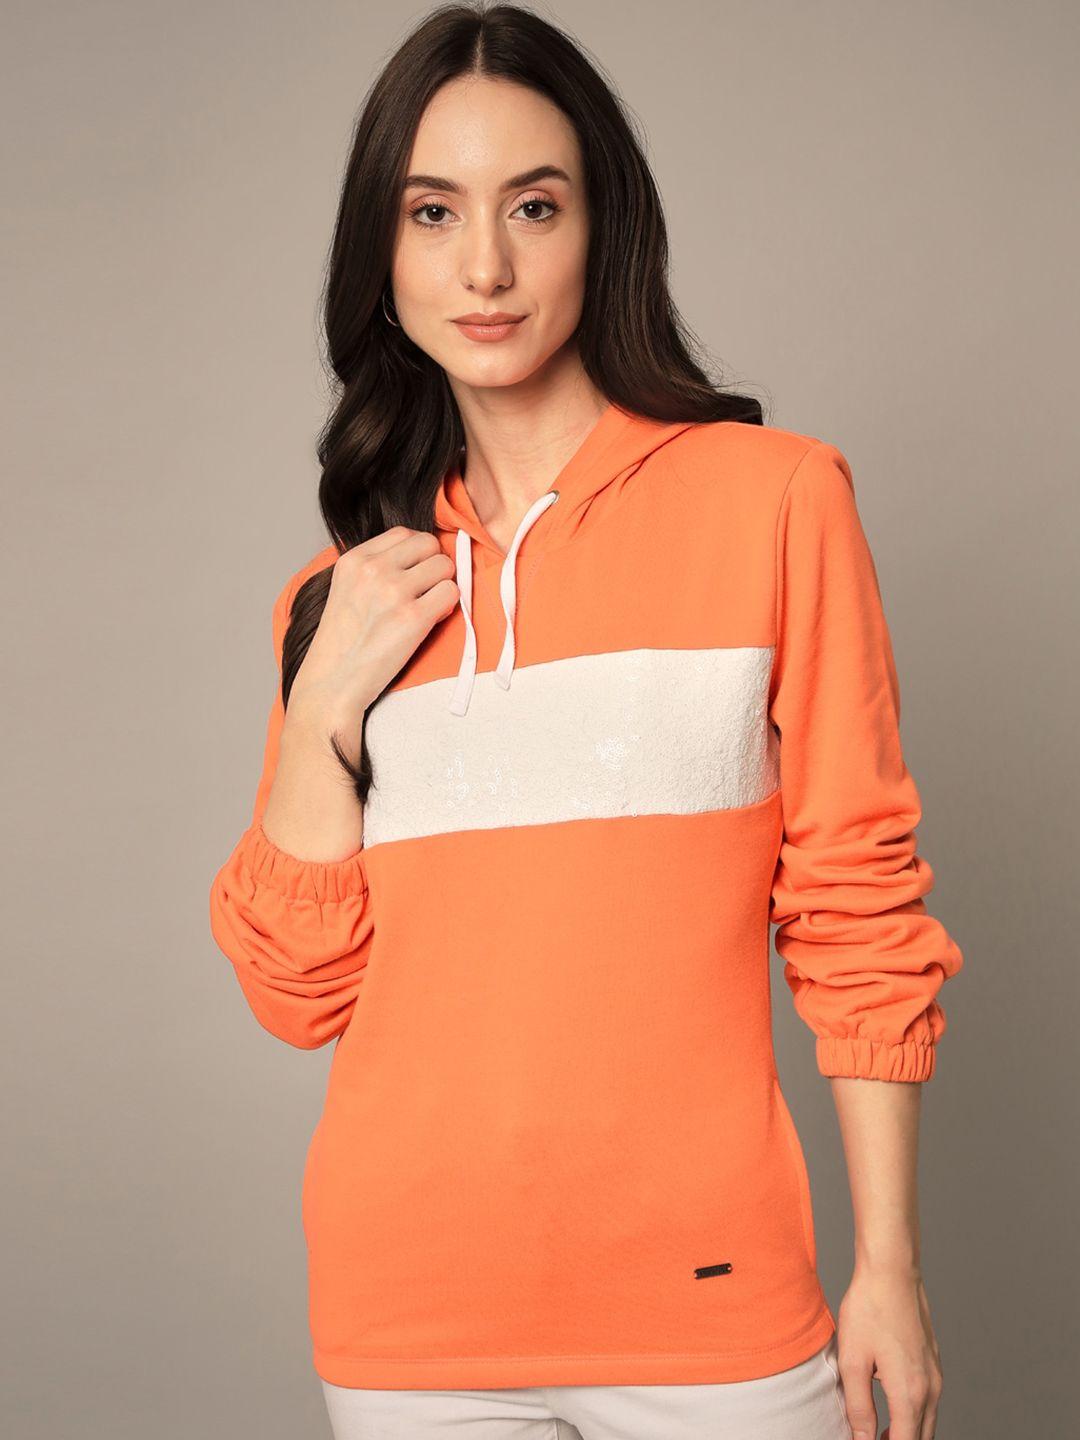 yaadleen women orange colourblocked hooded sweatshirt